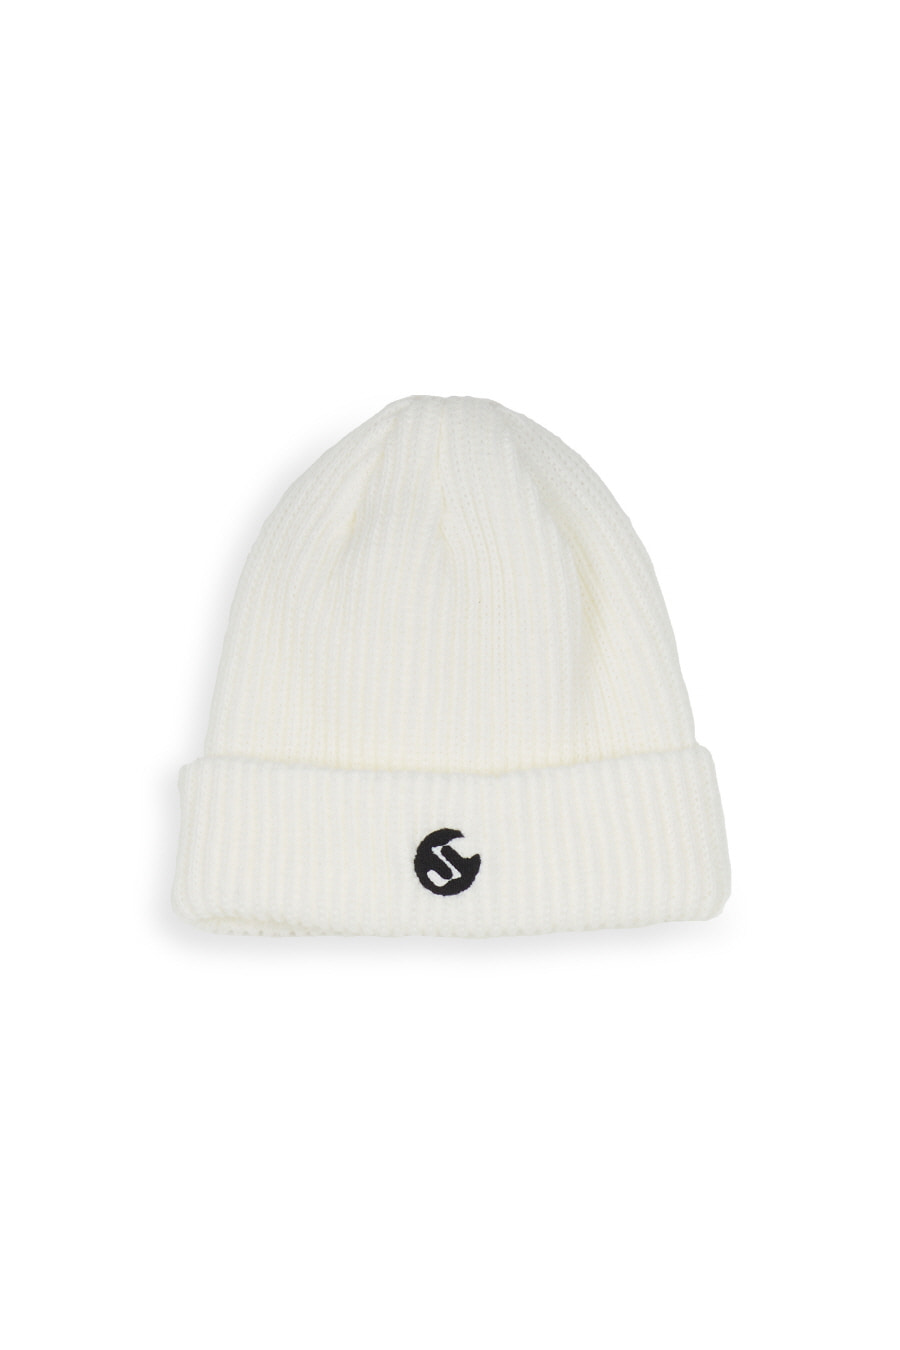 S Logo Knit Beanie - Off White